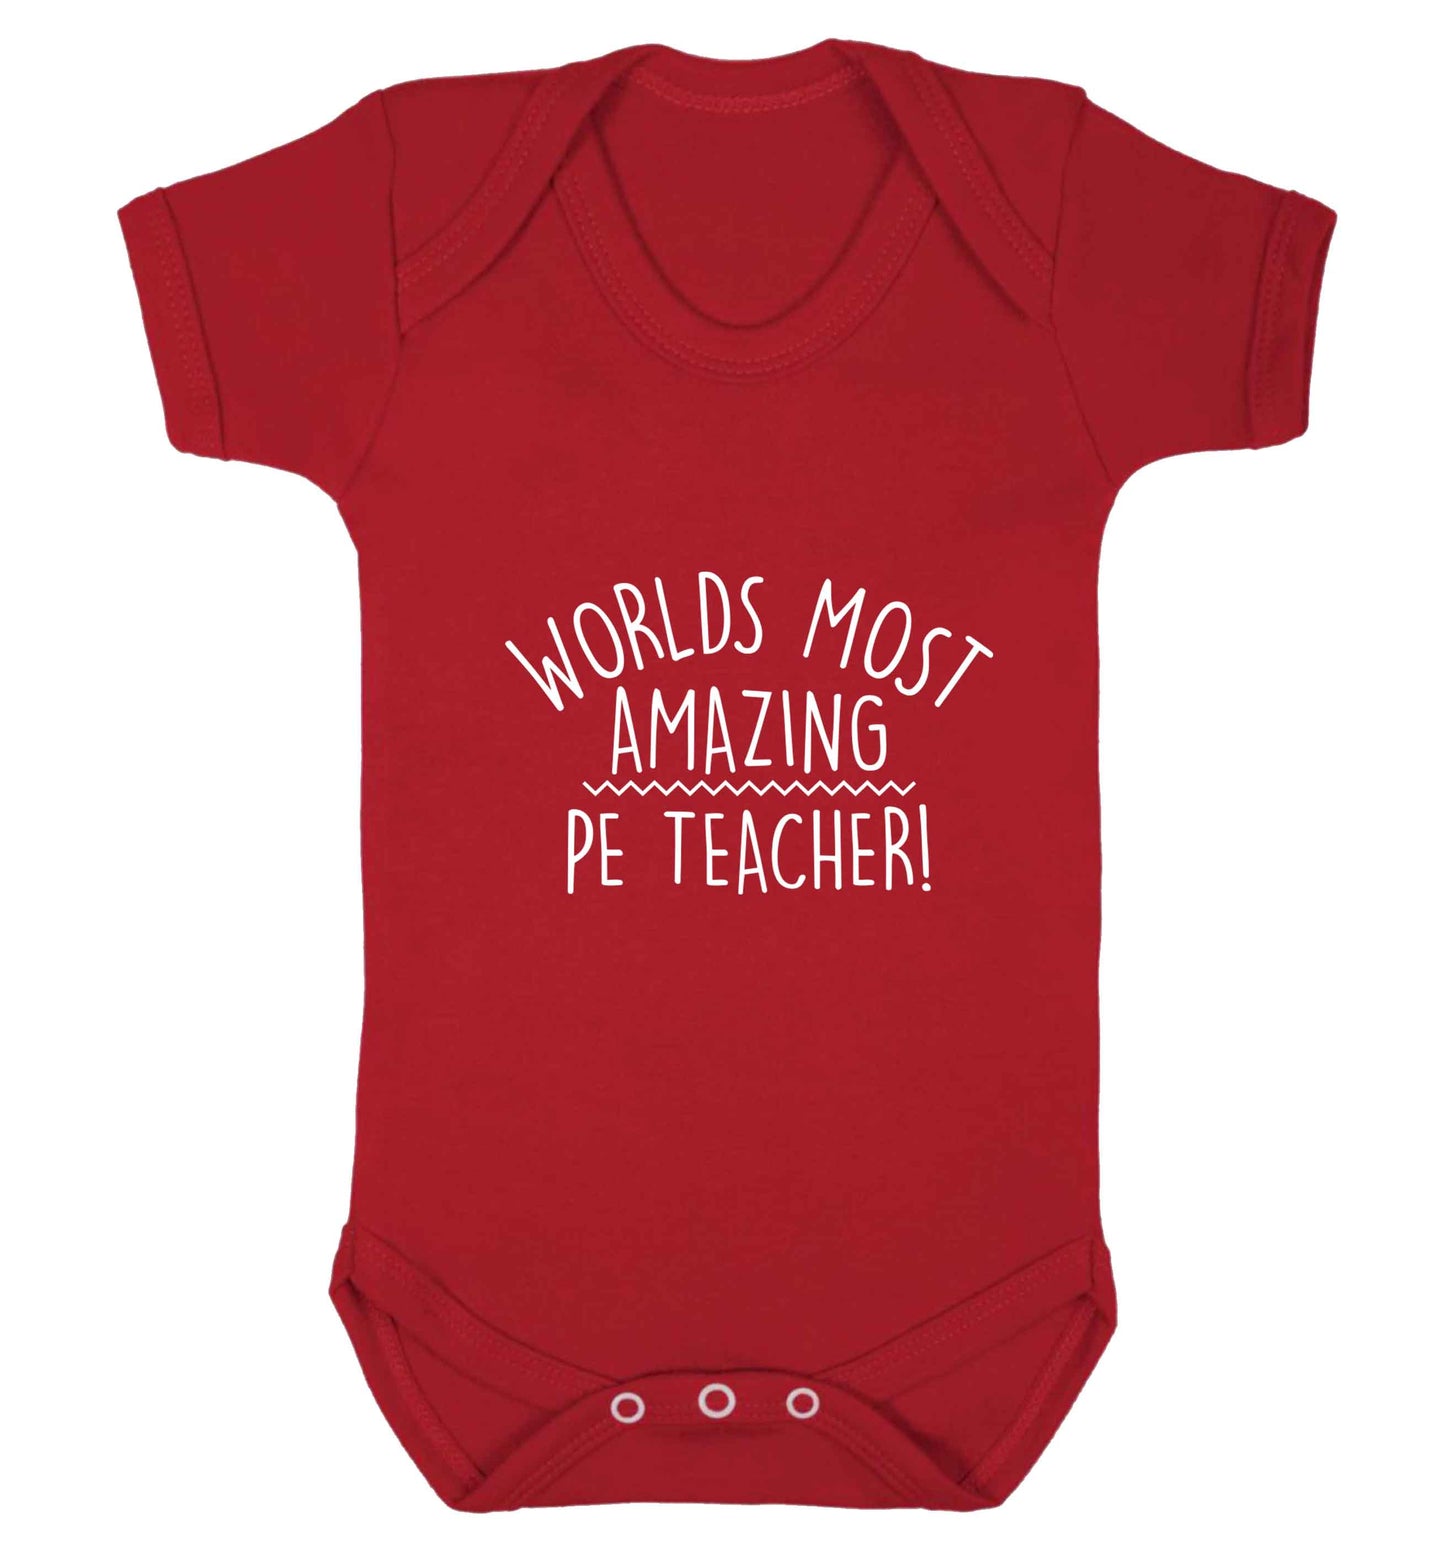 Worlds most amazing PE teacher baby vest red 18-24 months